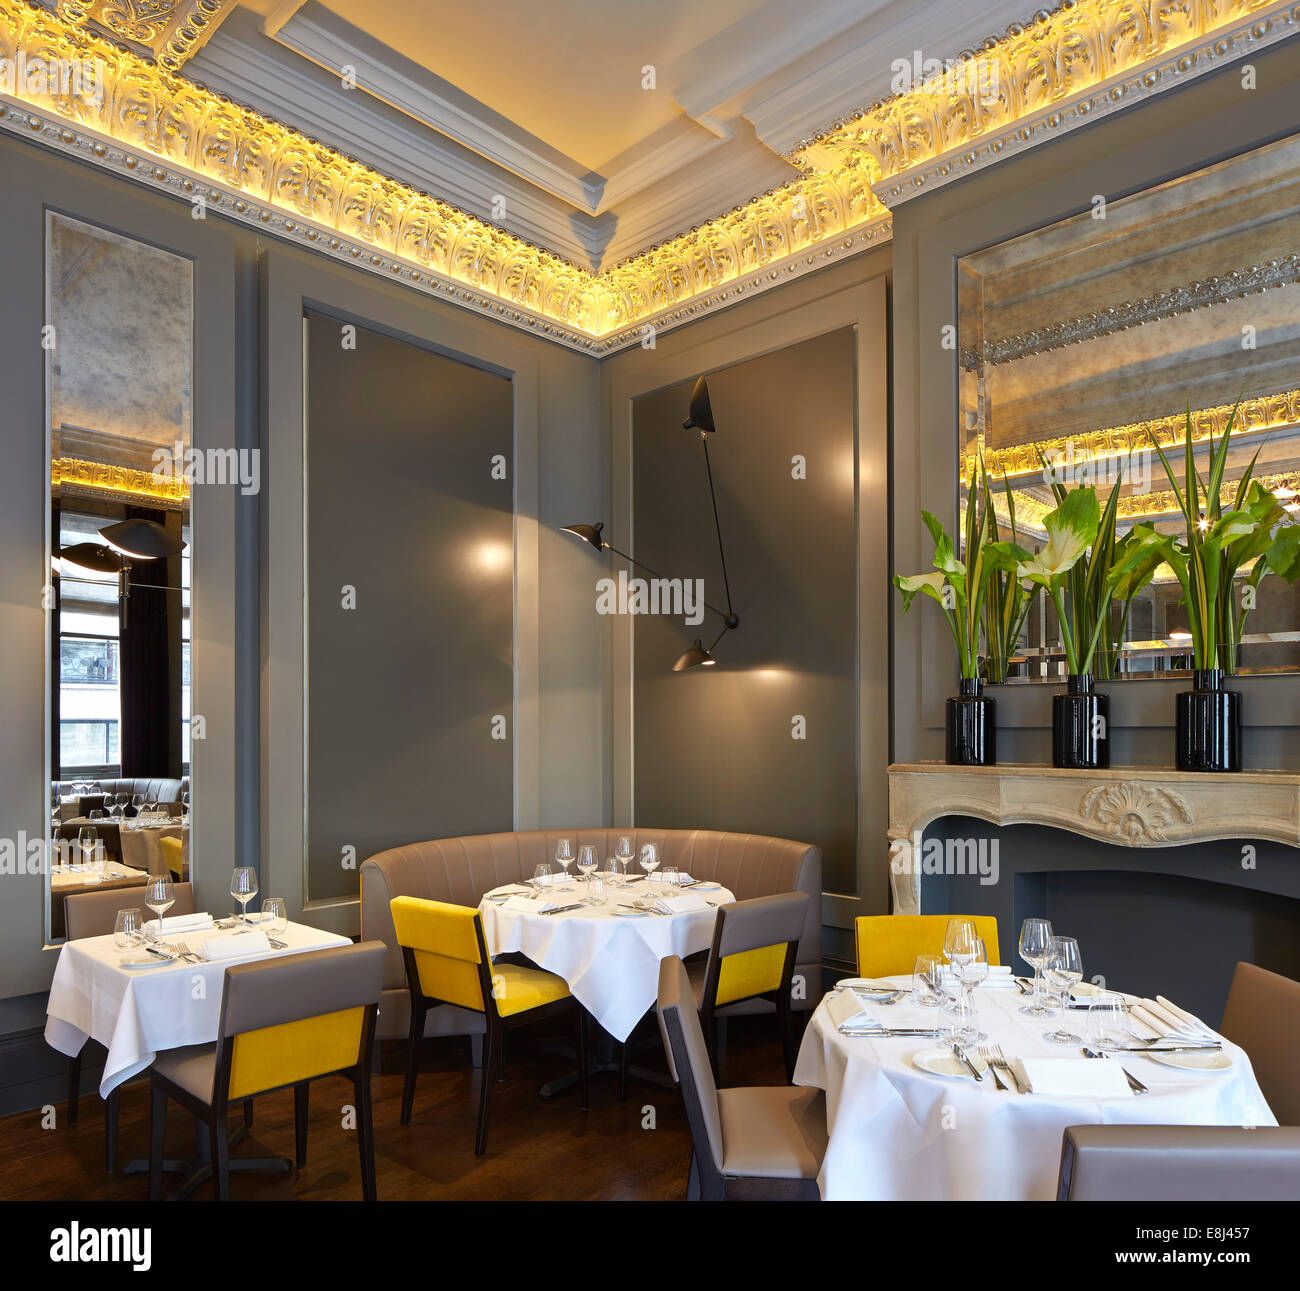 Christopher's, London, United Kingdom. Architect: De Matos Ryan, 2013. Seating arrangements in dining room. Stock Photo